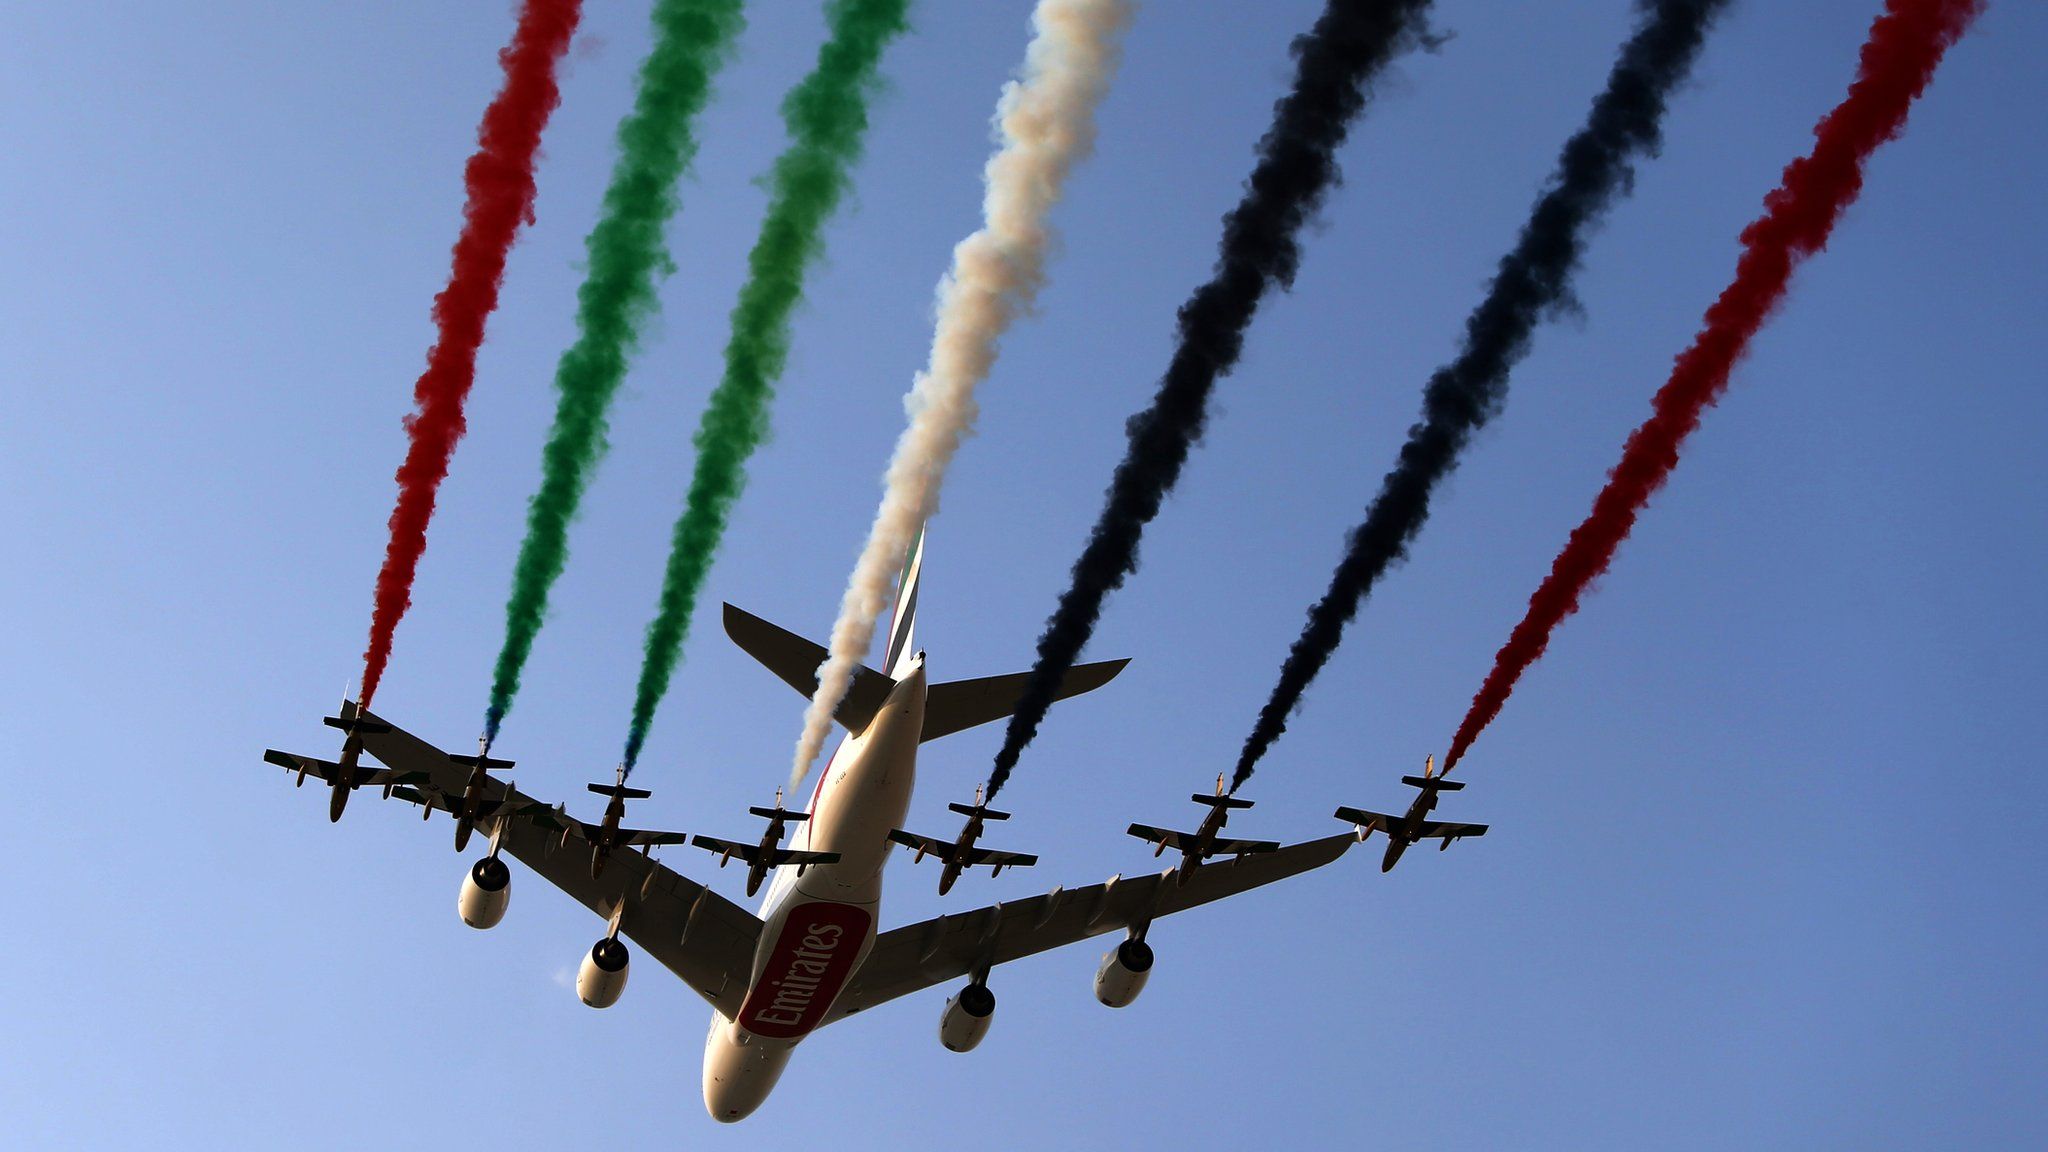 UAE air force aerobatics team performs with an Emirates Airline Airbus A380 at 2013 Dubai Airshow